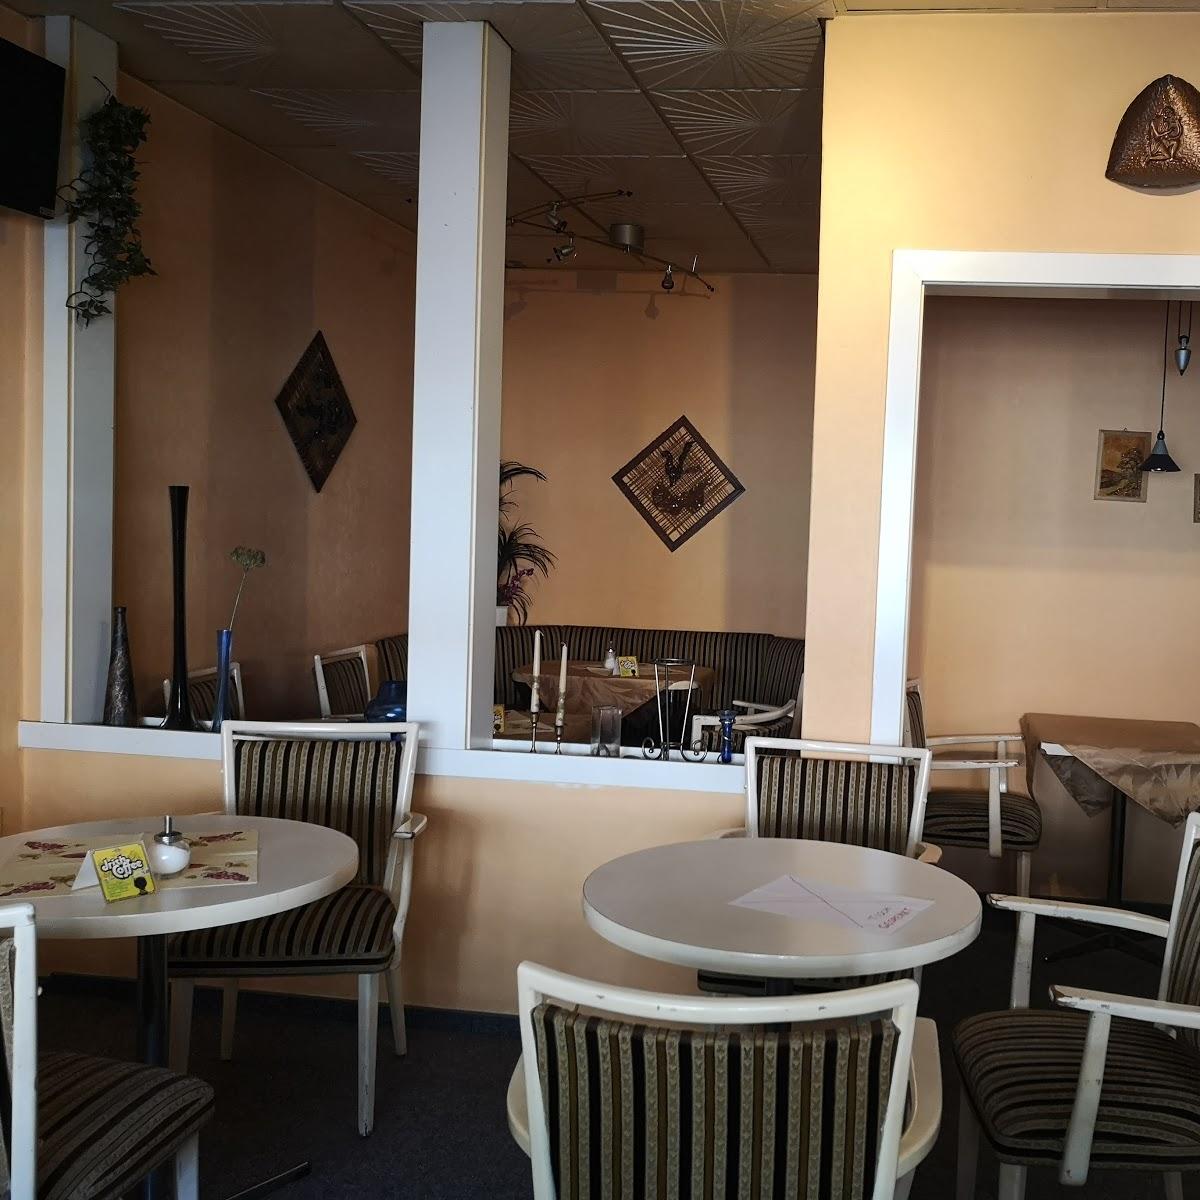 Restaurant "Cafe am Bohlweg Georgiew" in Wildemann